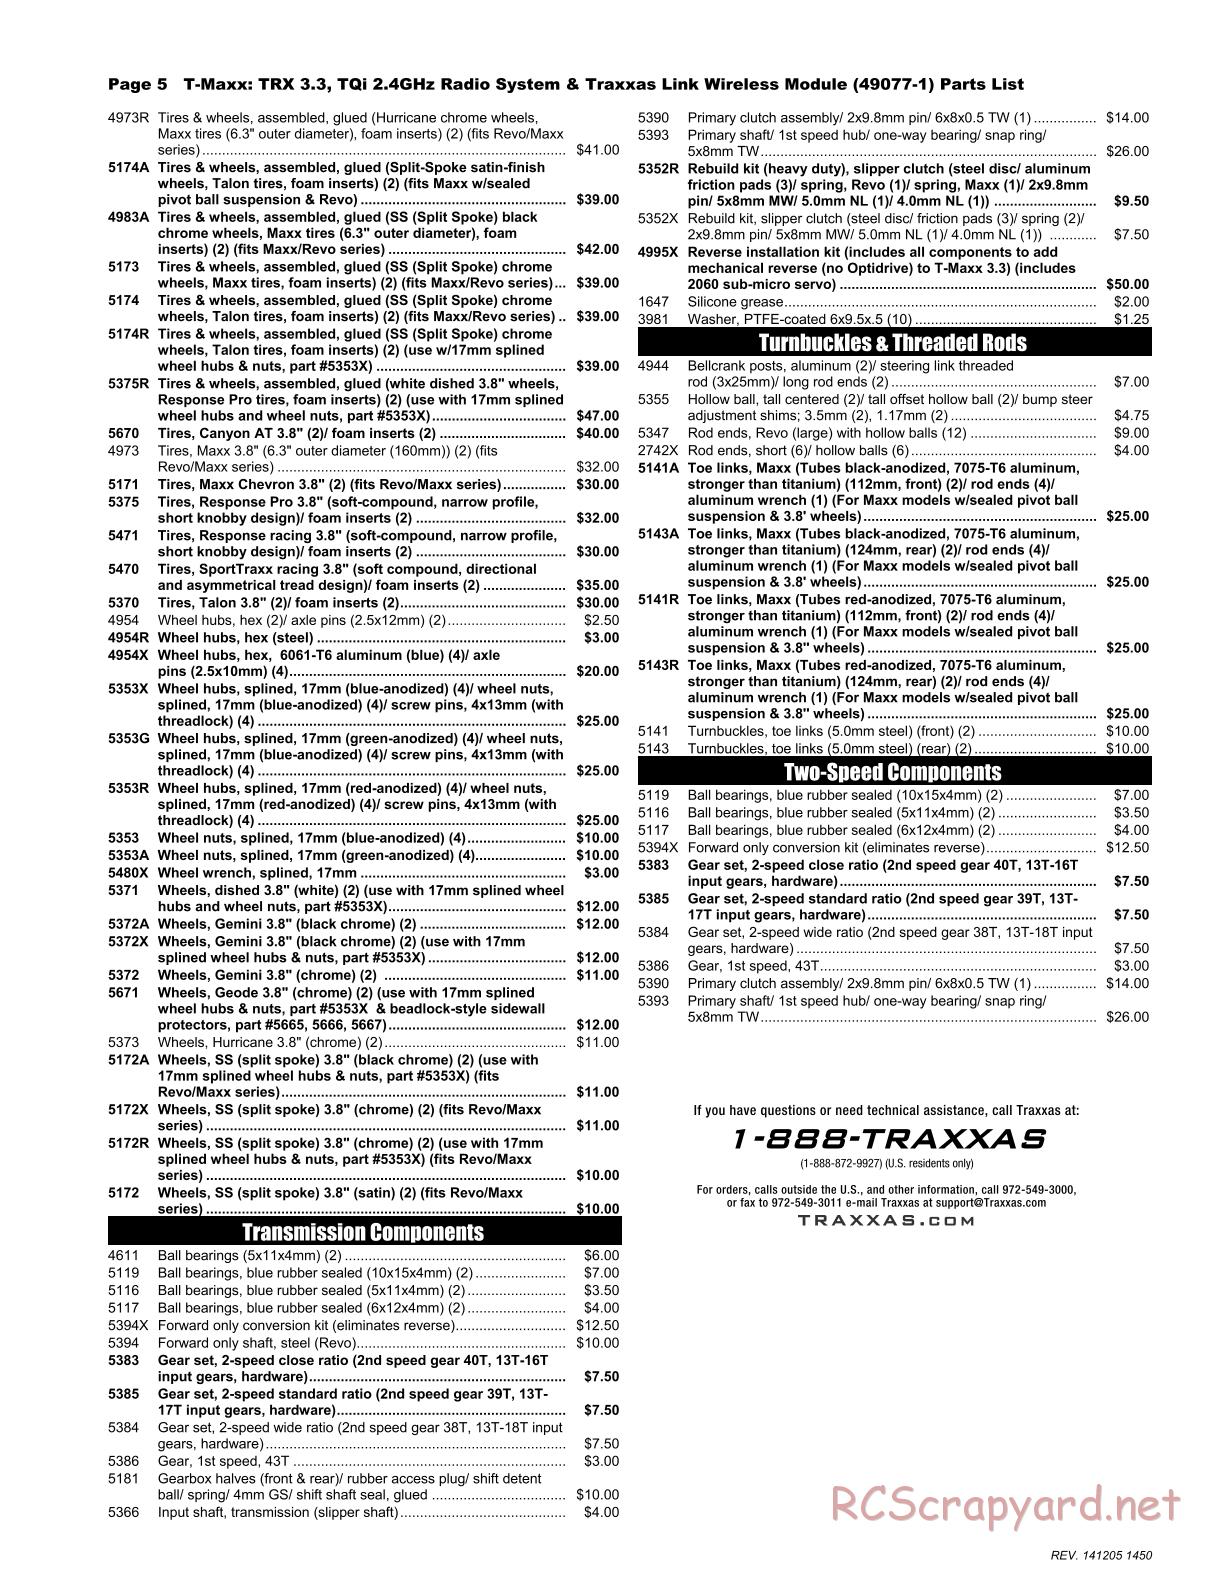 Traxxas - T-Maxx 3.3 (2015) - Parts List - Page 5